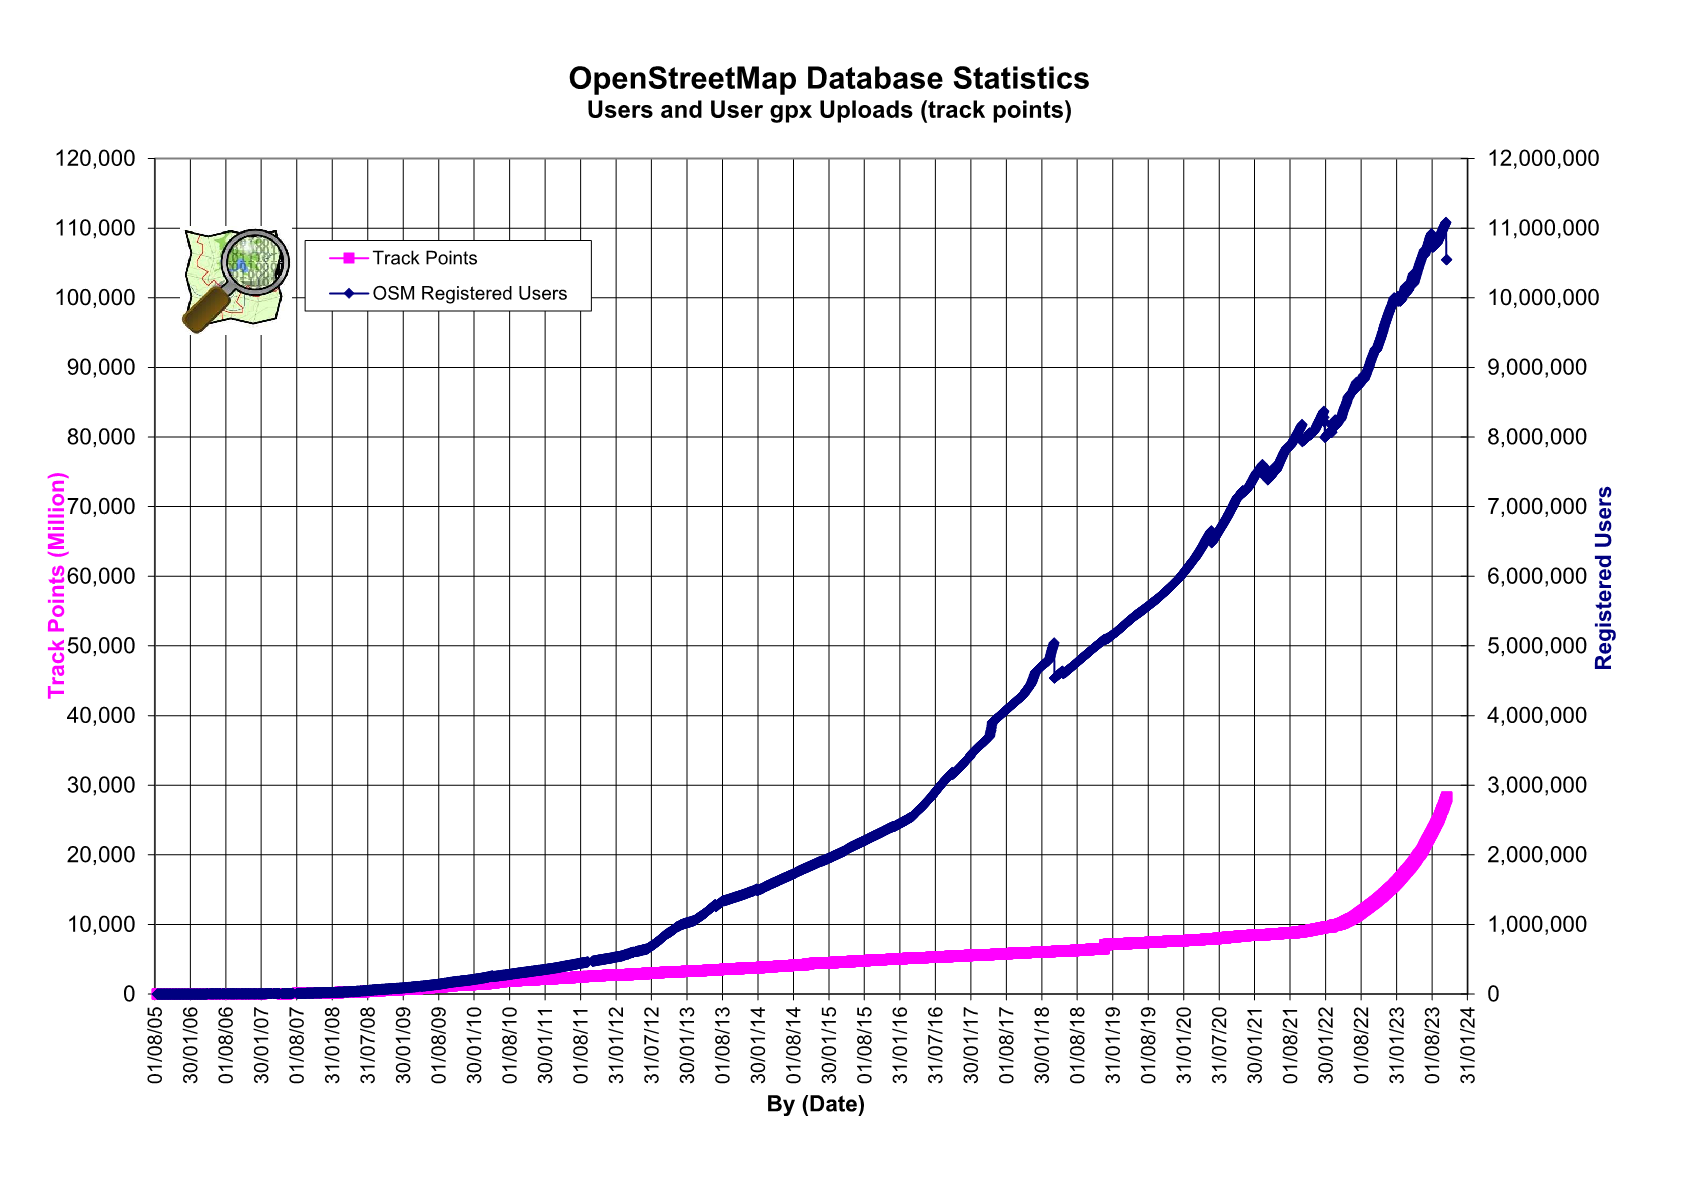 OSM passes 100,000 users!